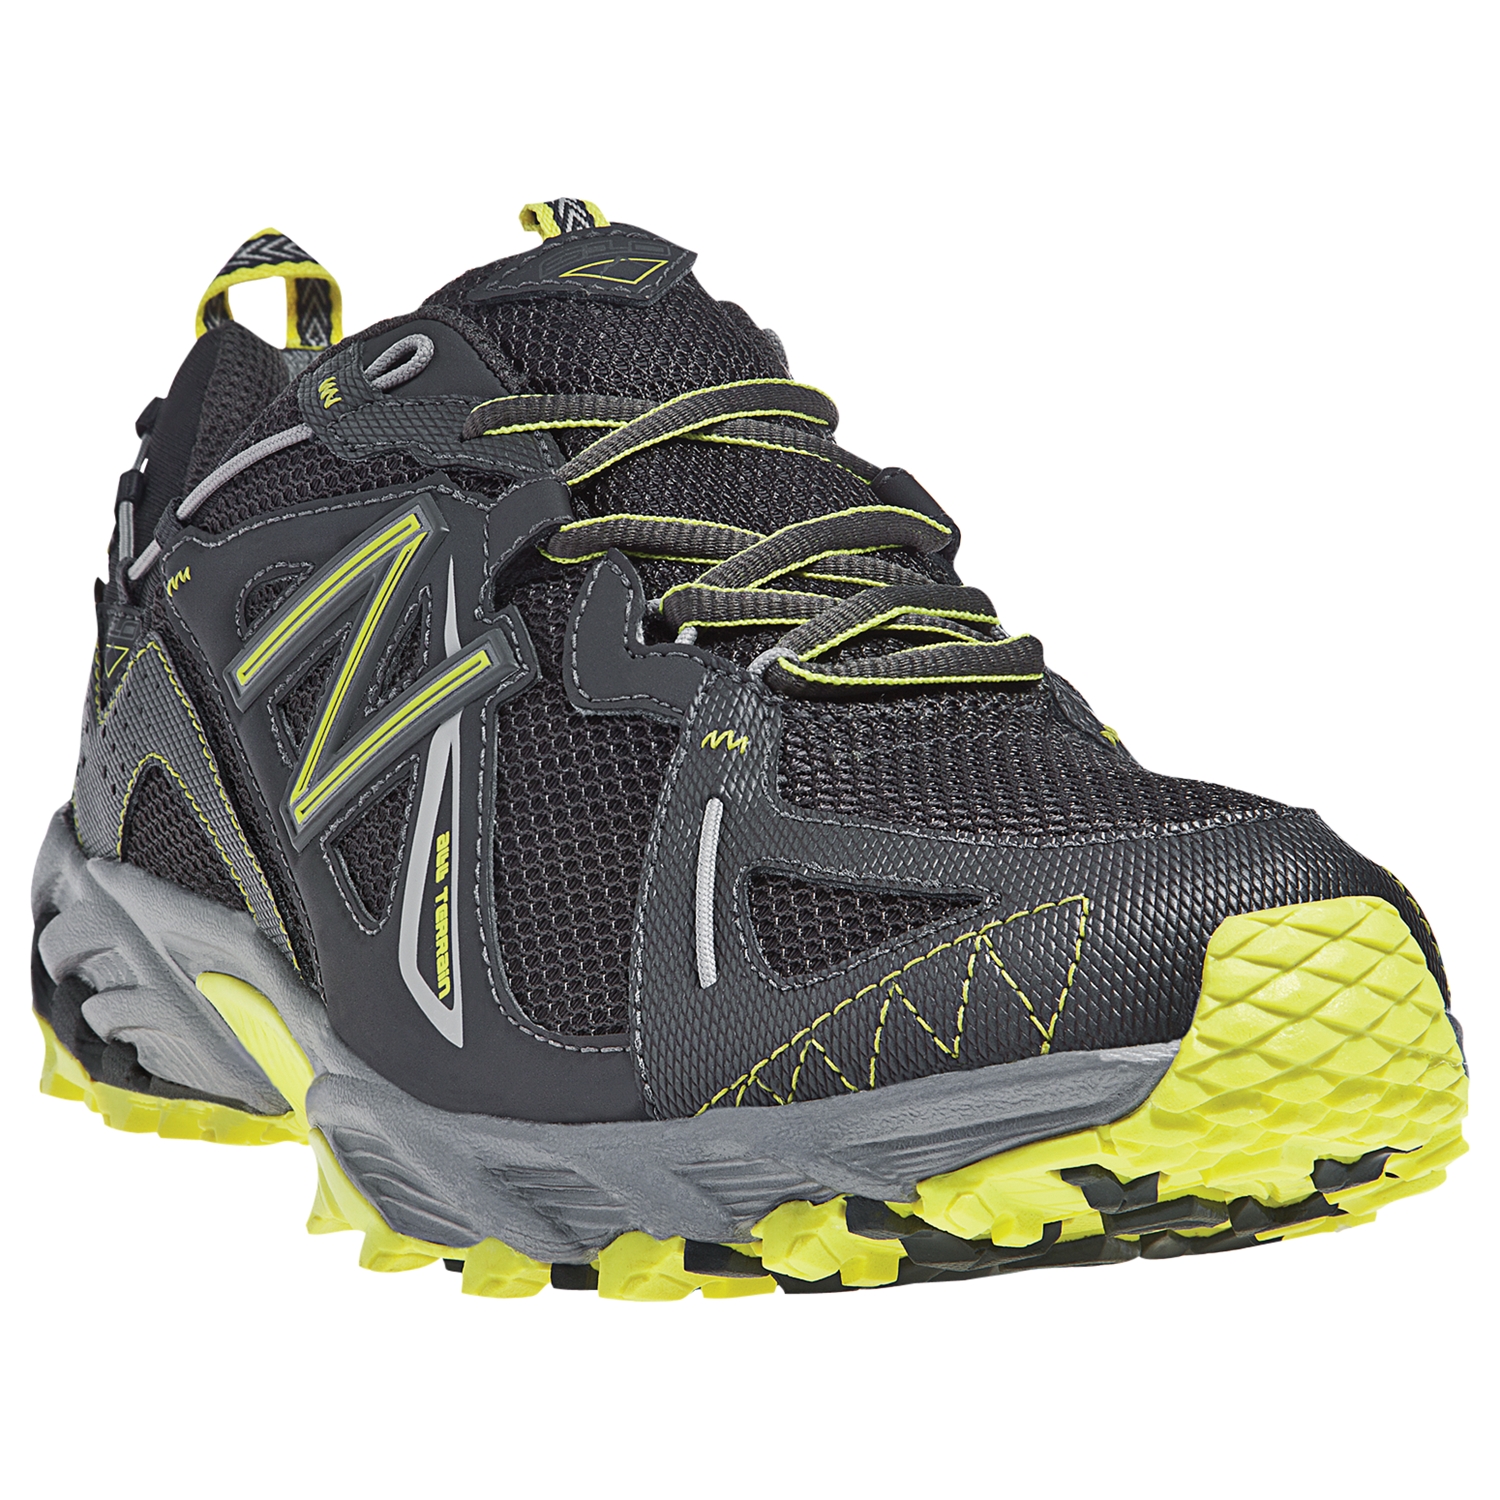 New Balance 610 Gtx Mens Trail Running Shoes Blackyellow for Men - Lyst